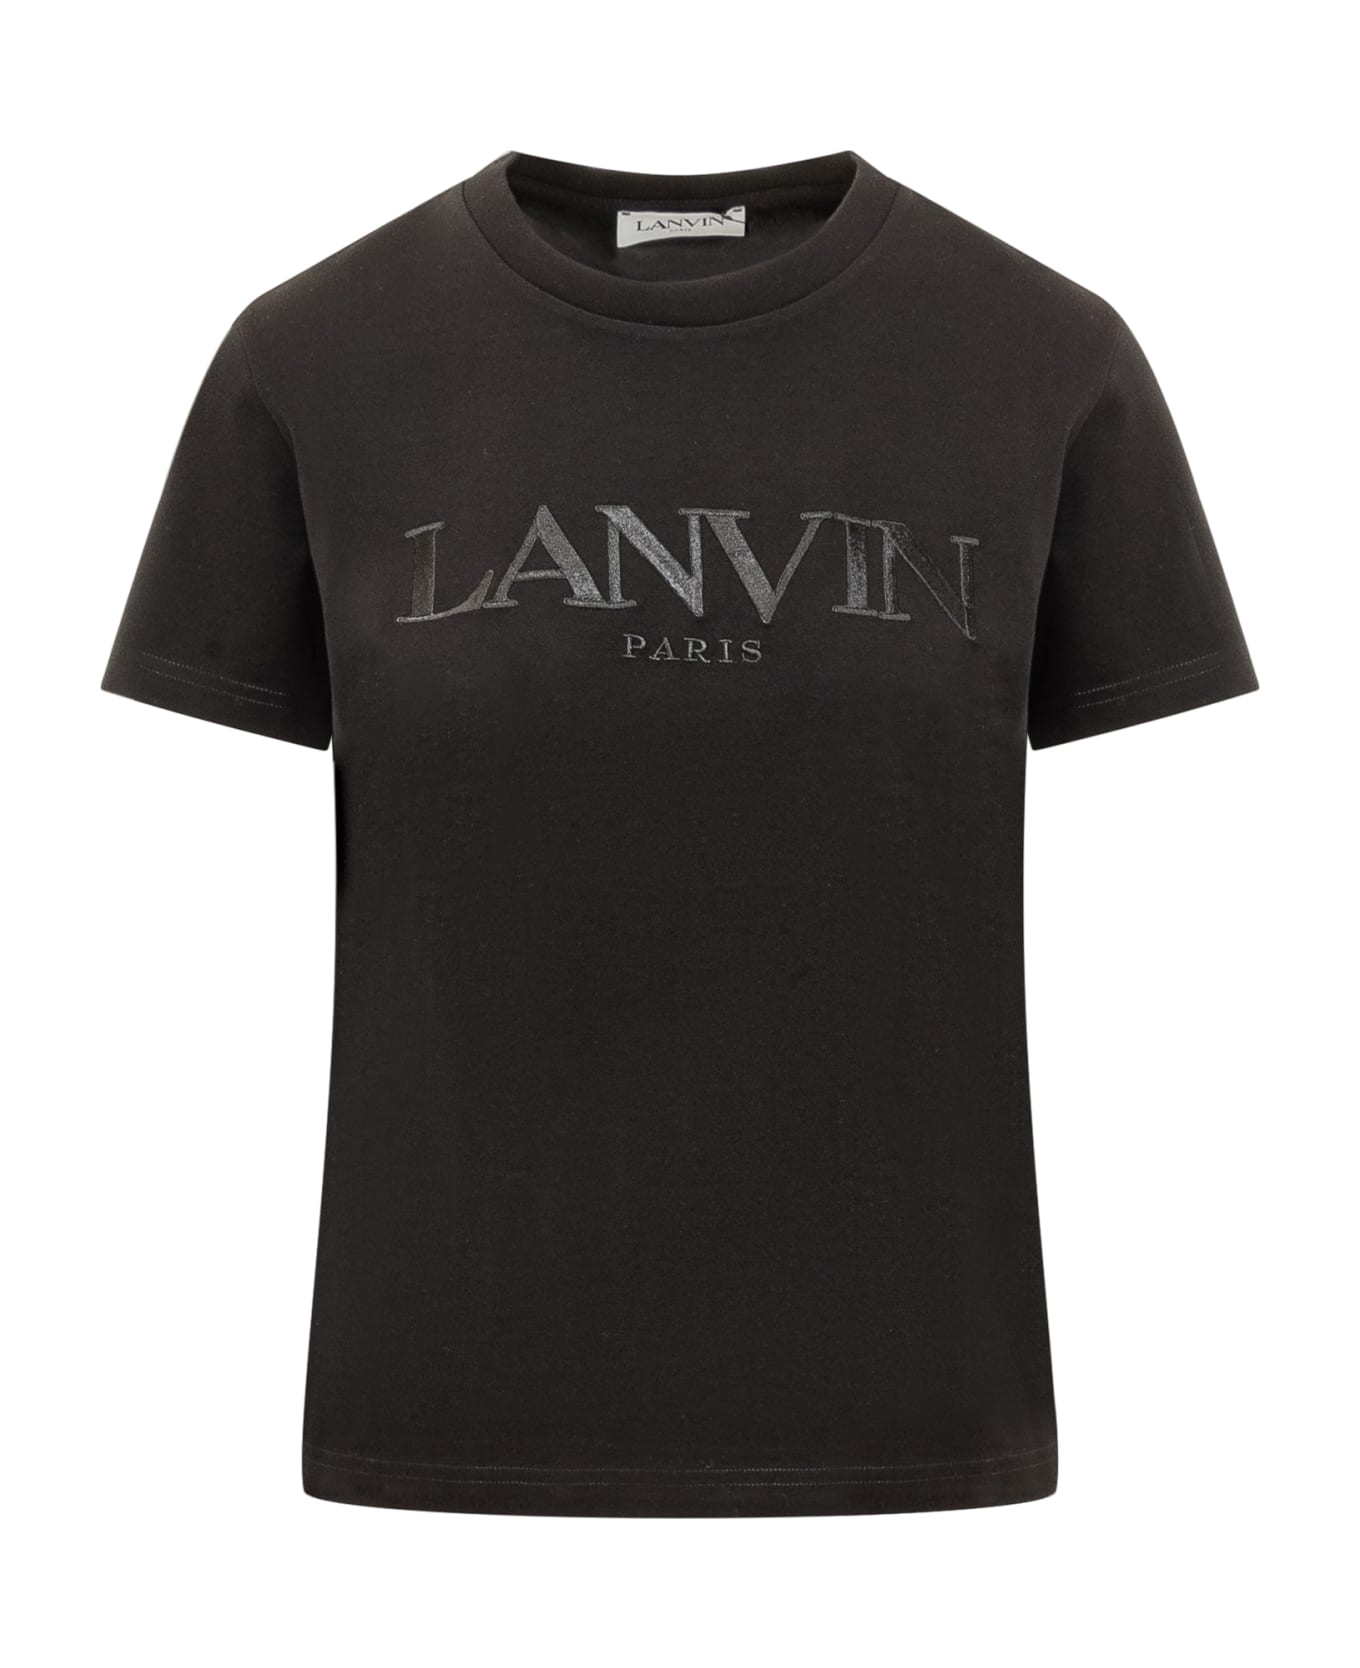 Lanvin T-shirt - Black Tシャツ